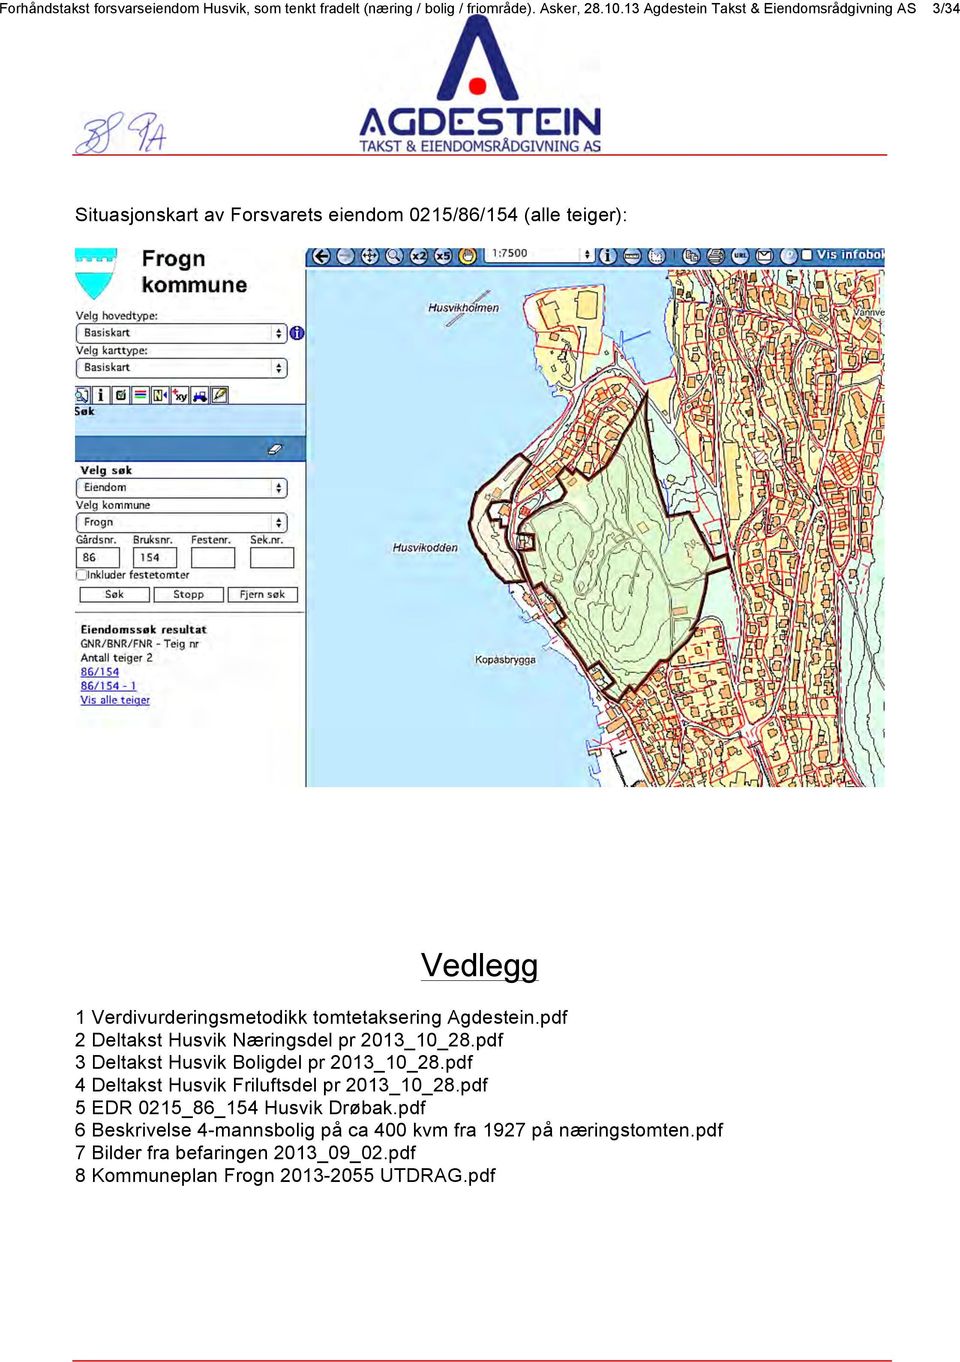 tomtetaksering Agdestein.pdf 2 Deltakst Husvik Næringsdel pr 2013_10_28.pdf 3 Deltakst Husvik Boligdel pr 2013_10_28.